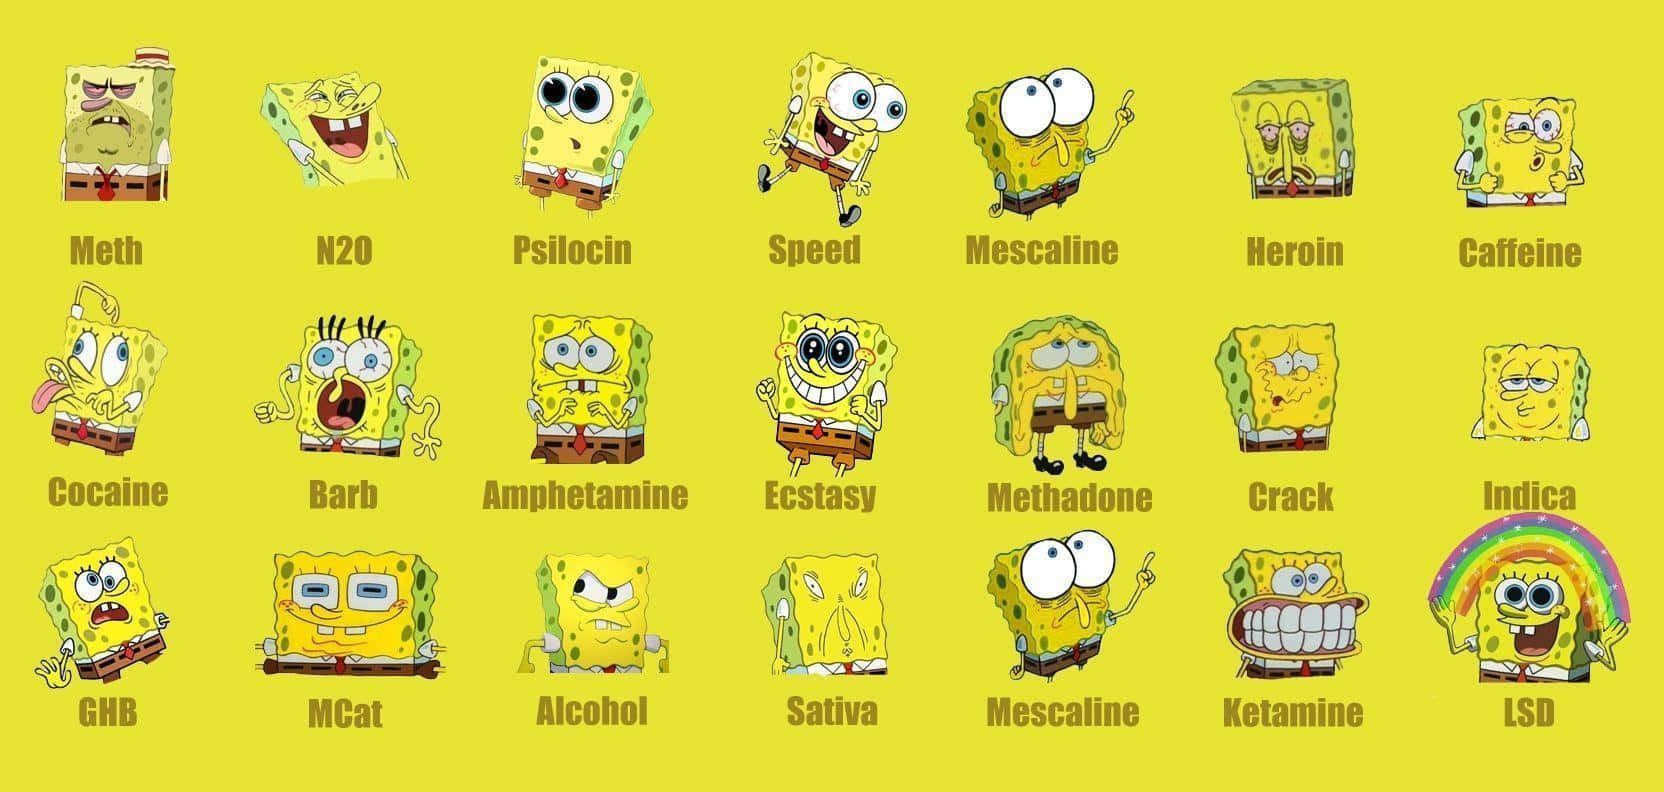 best spongebob faces ever